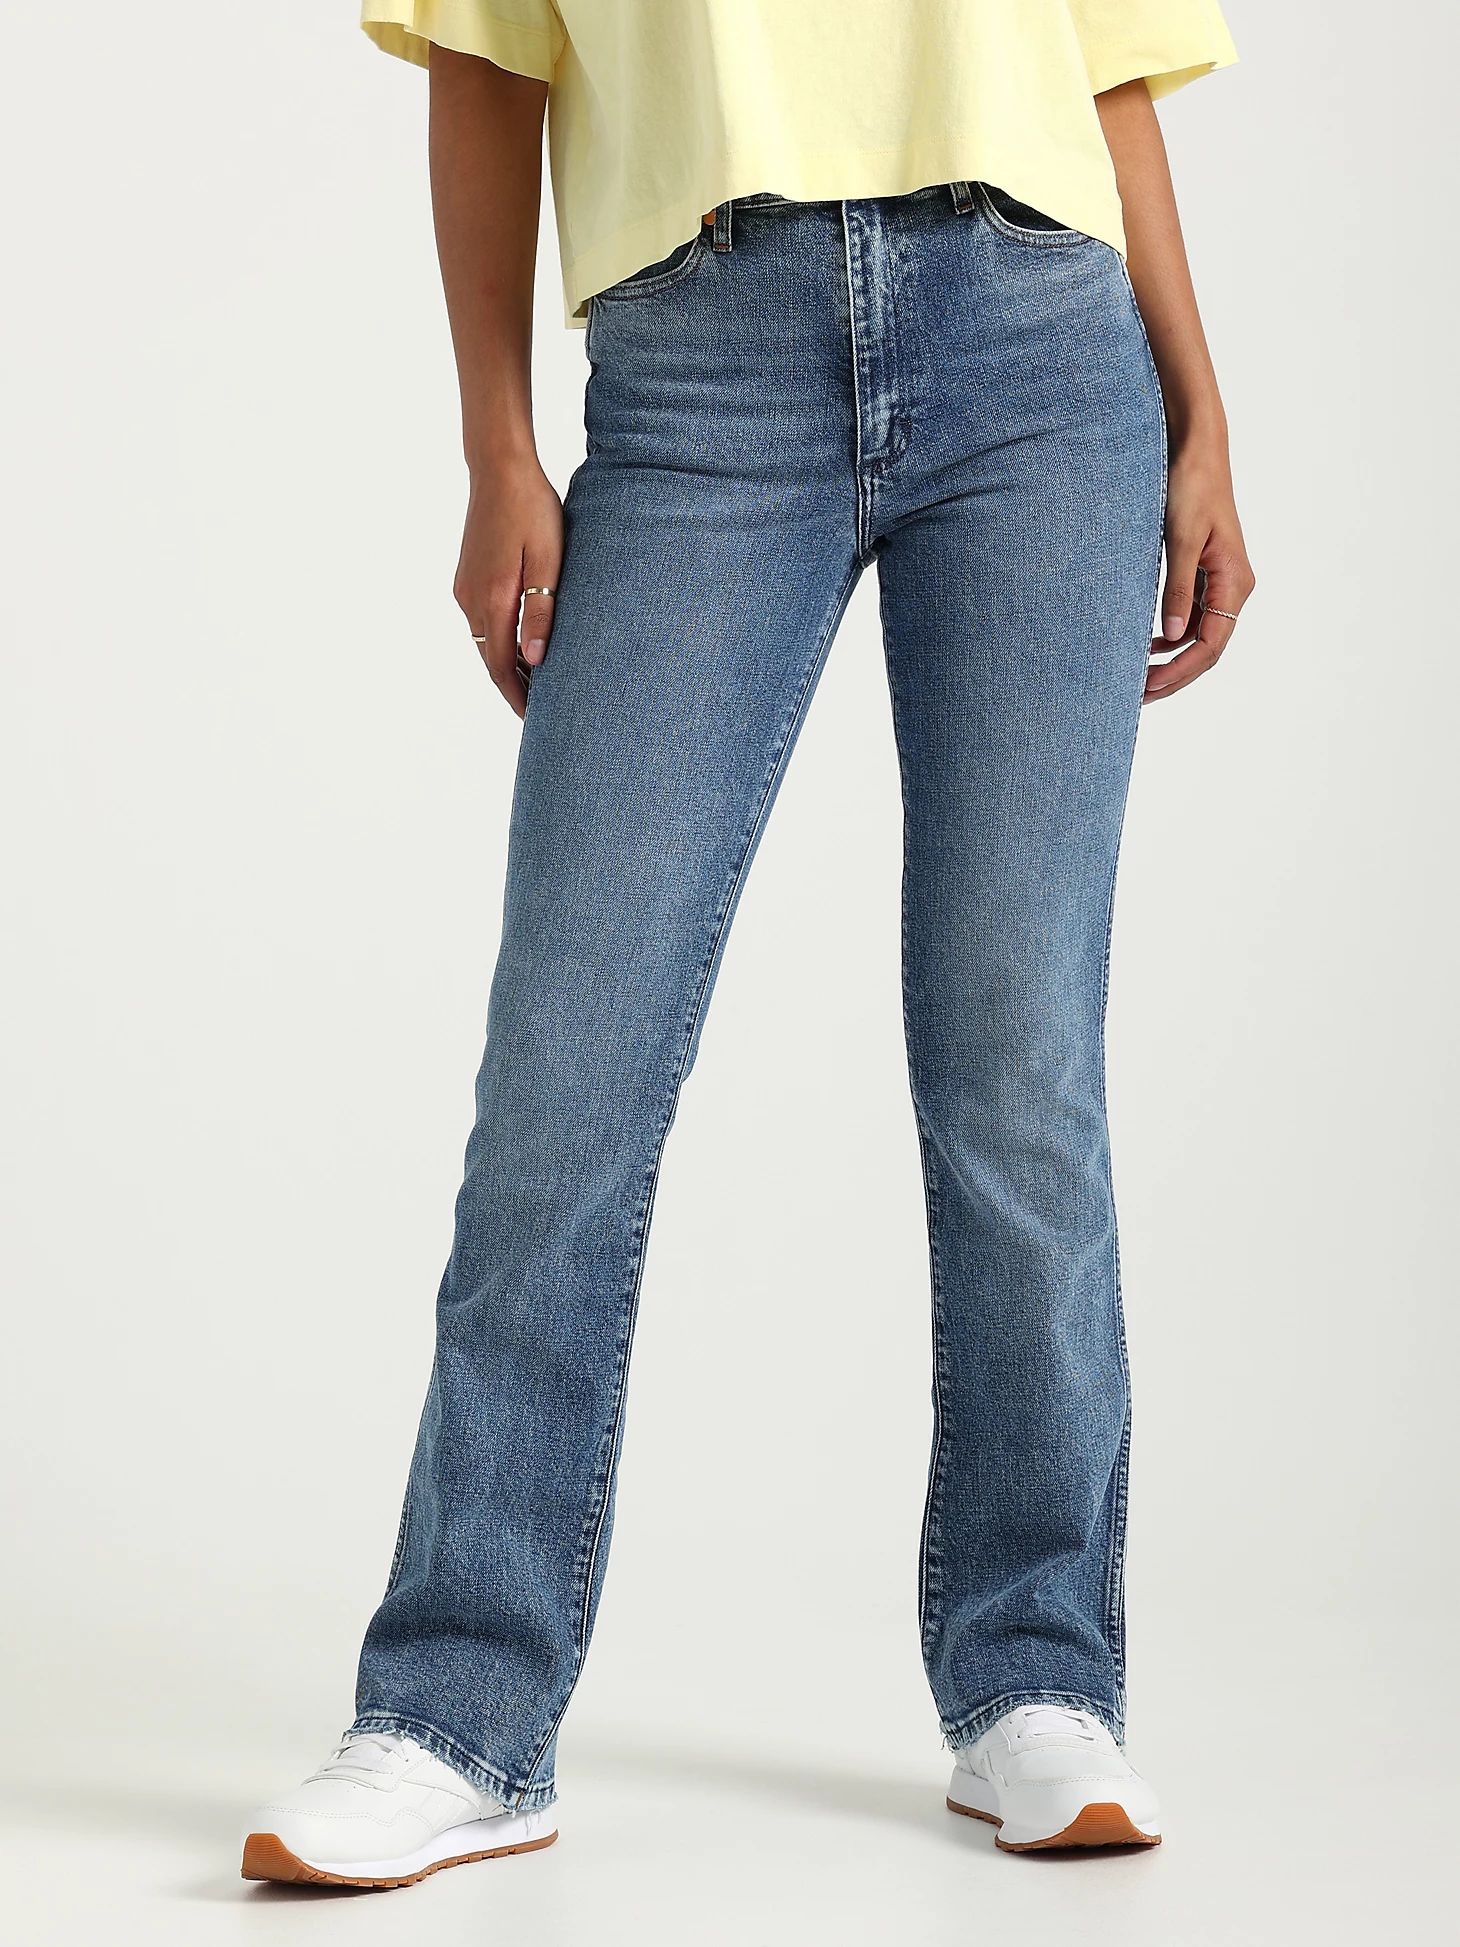 Women's Wrangler® Westward 626 High Rise Bootcut Jean in Forget Me Not | Wrangler